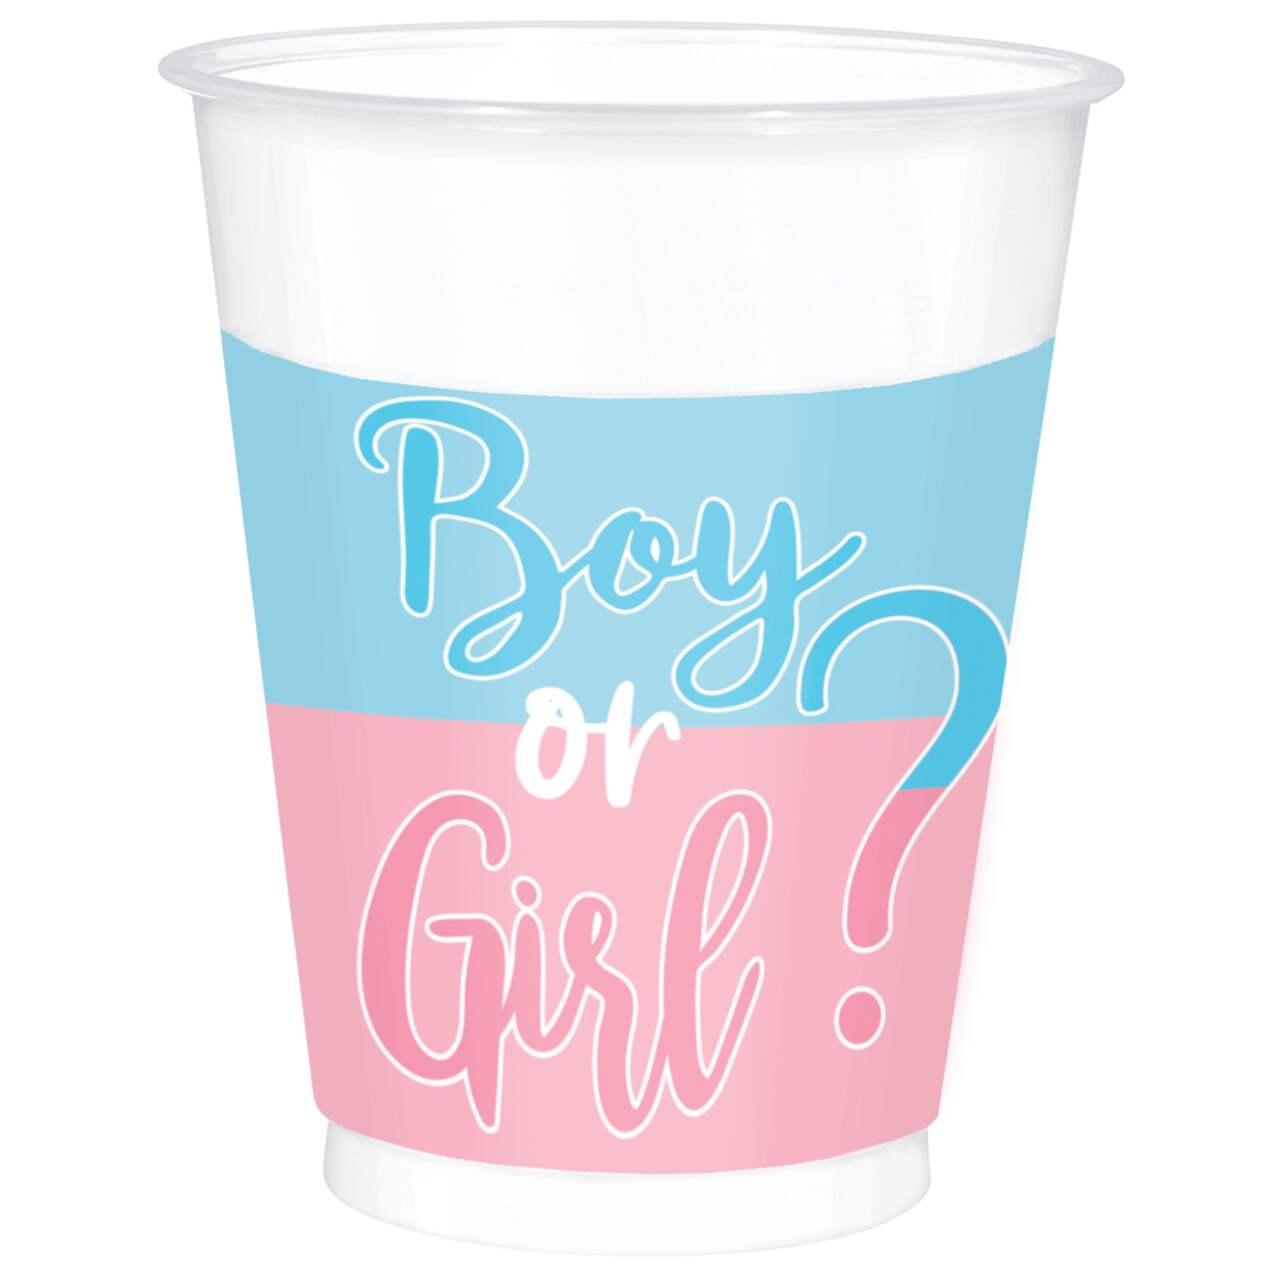 Tasse la Pat Patrouille Disney mug plastique gobelet enfant fille